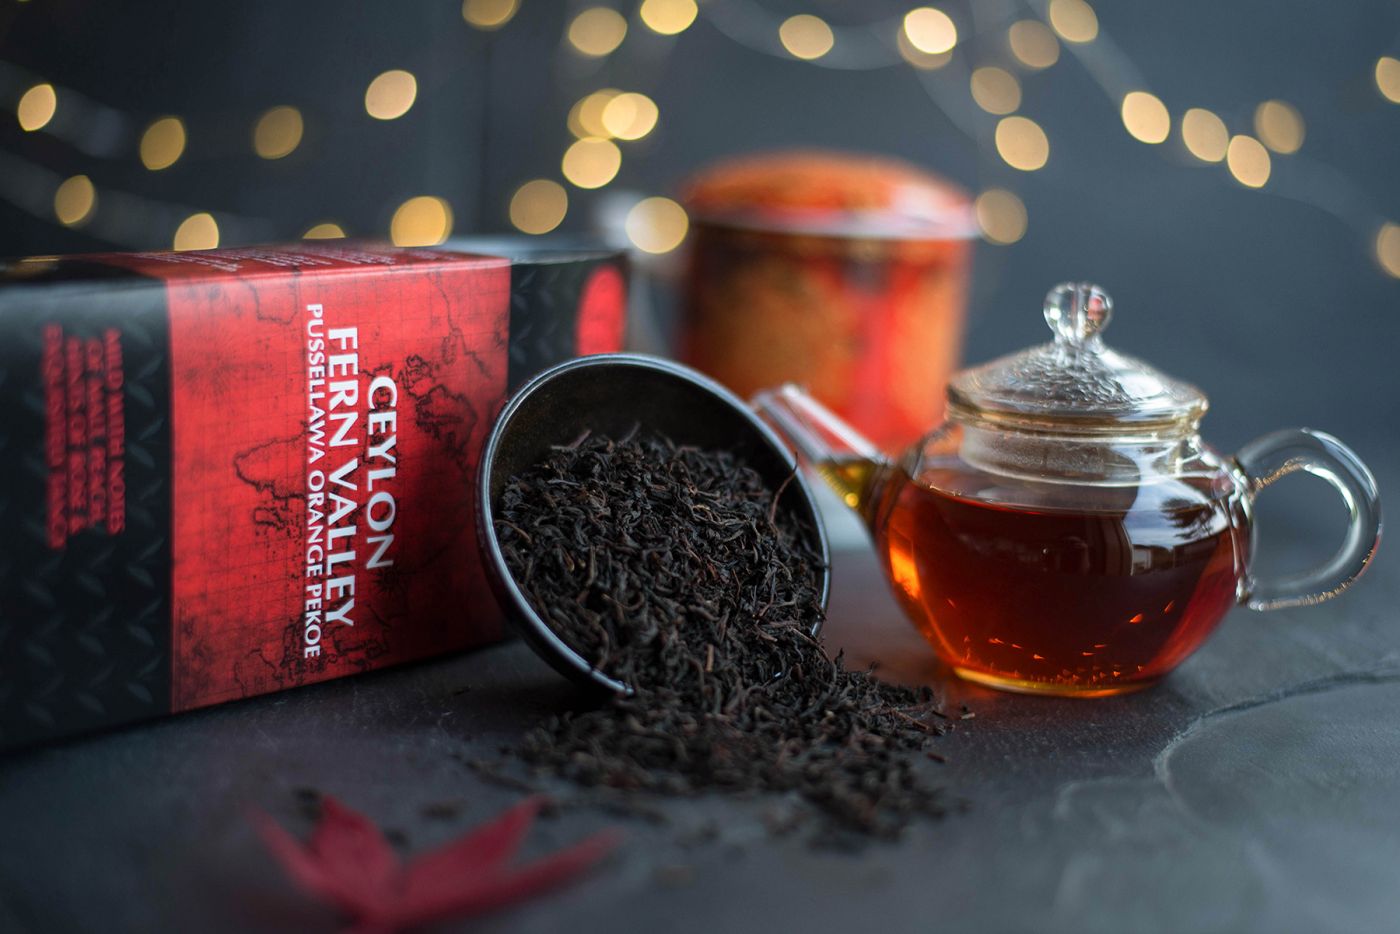 Ceylon Fern Valley Orange Pekoe Black Tea